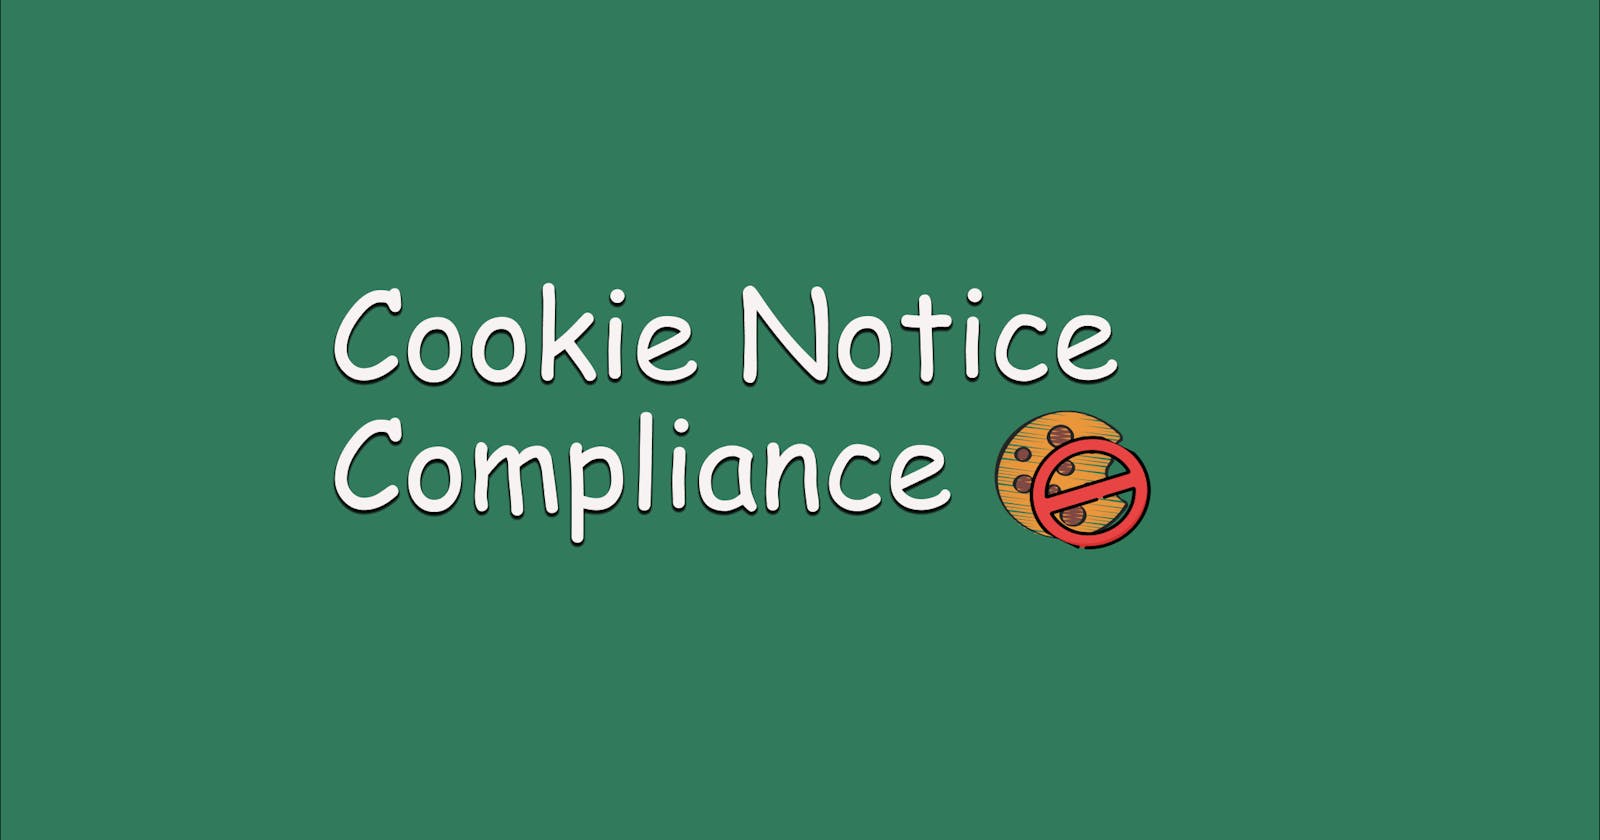 Cookie Notice Compliance